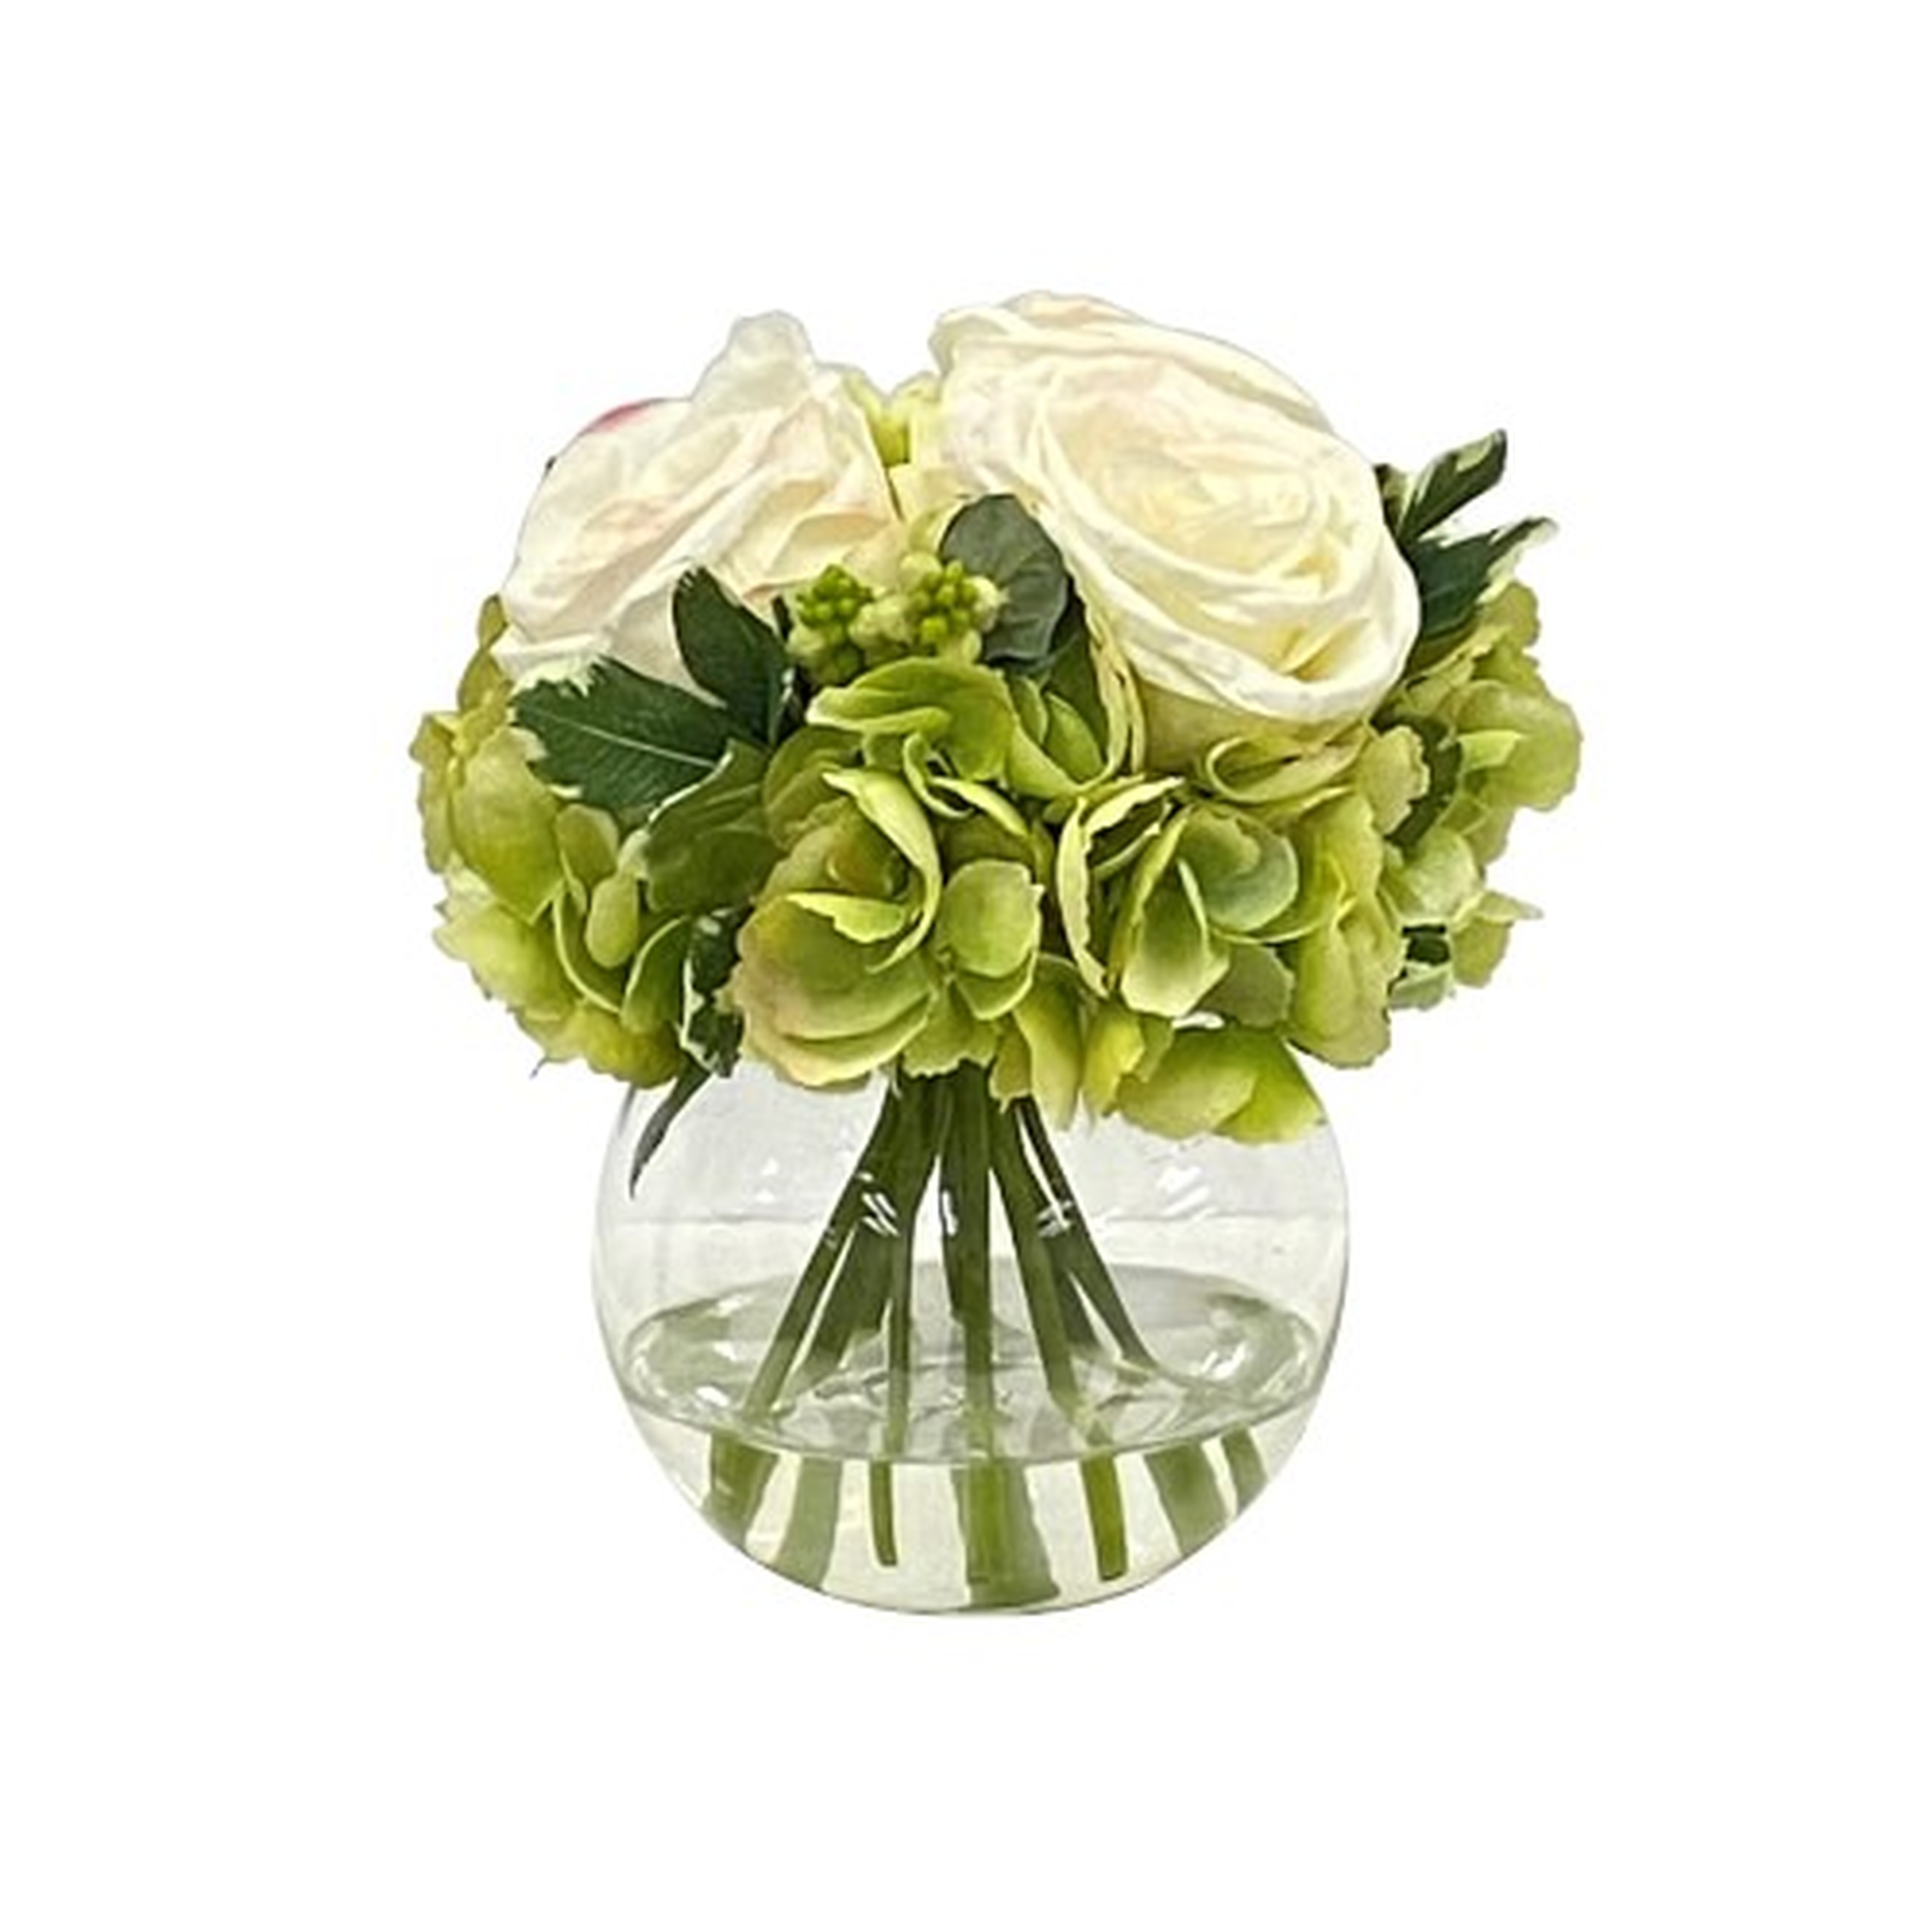 Faux Rose Hydrangea in Glass Vase - Williams Sonoma